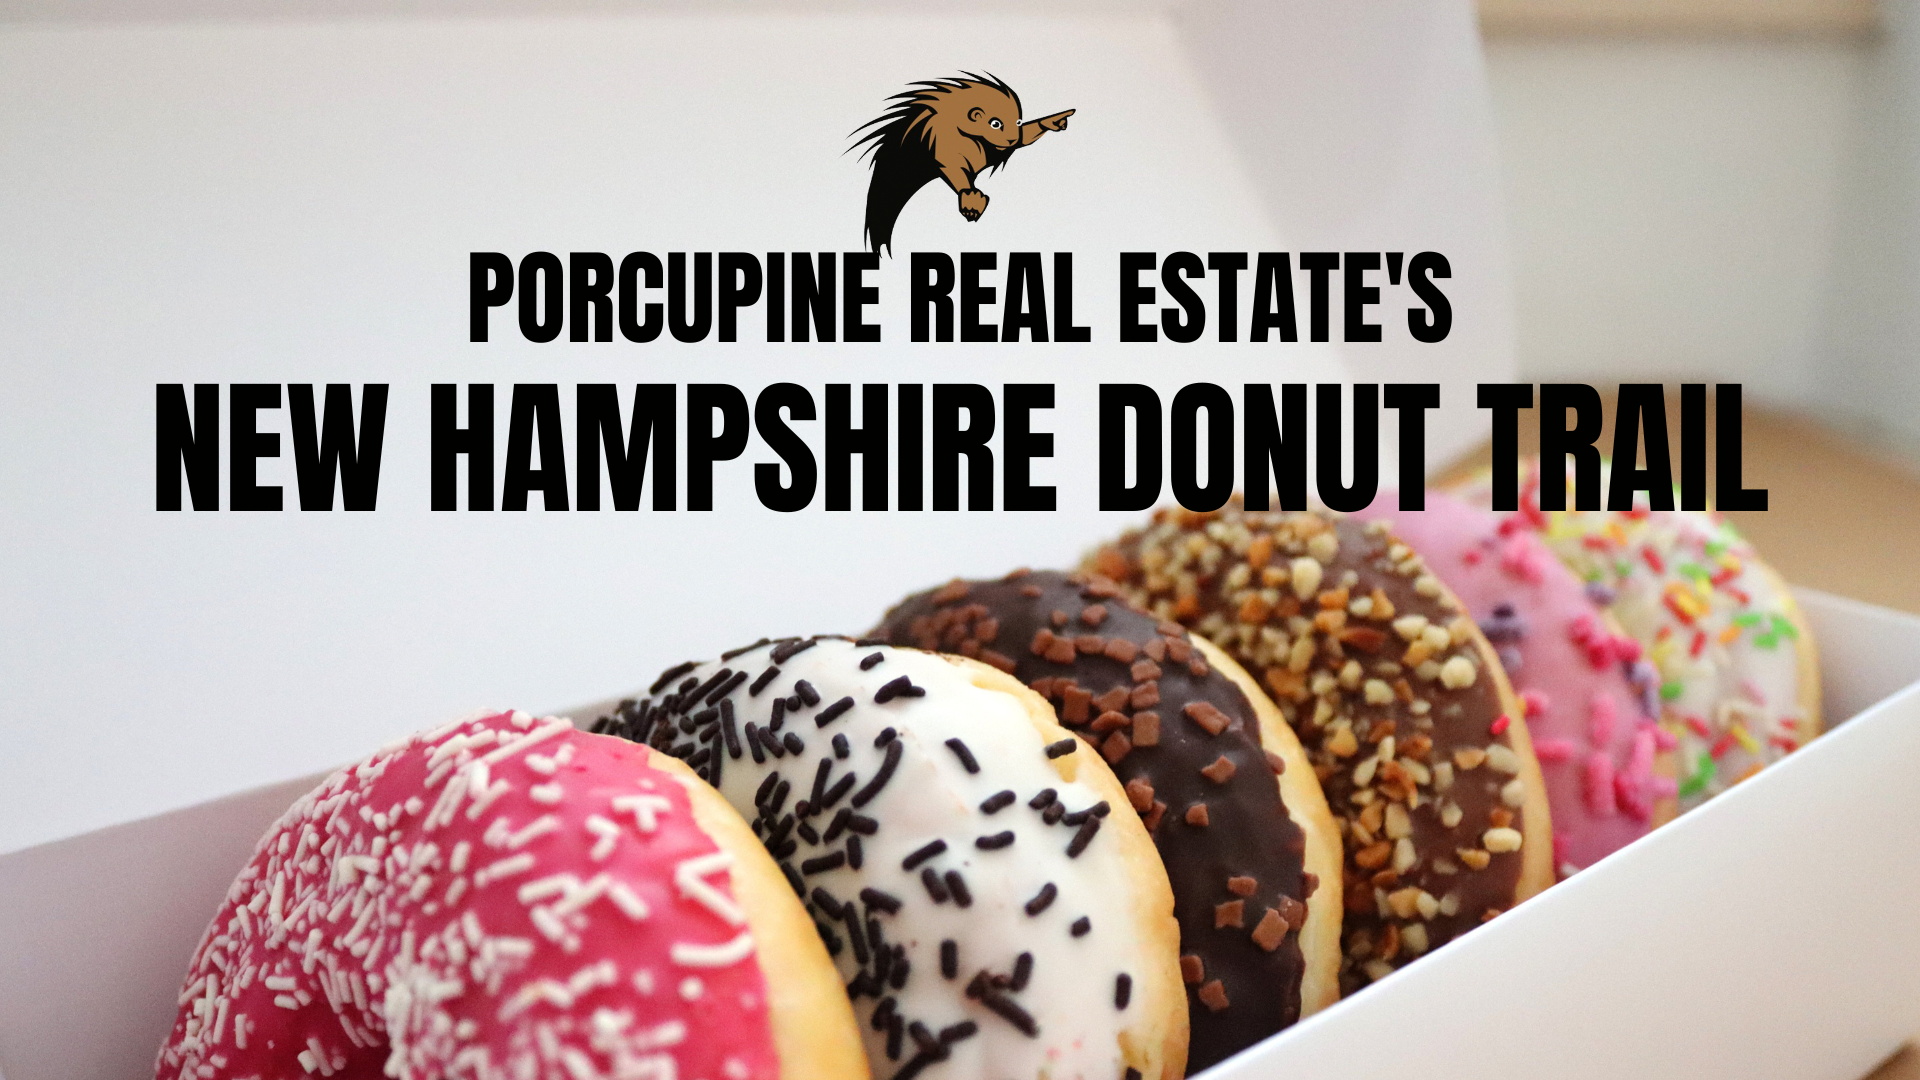 New Hampshire Donut Trail